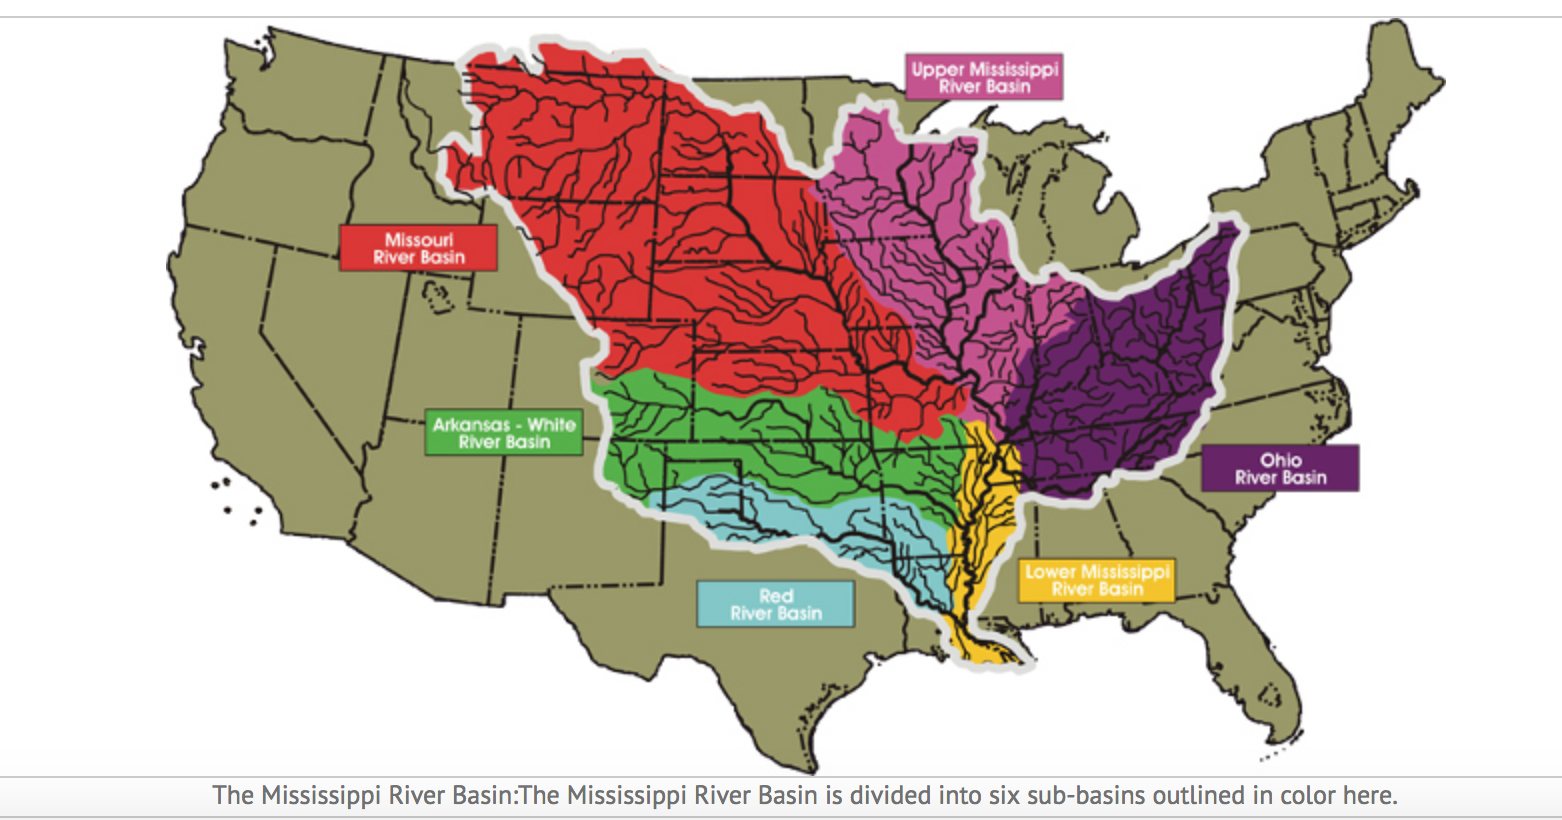 Миссури какой бассейн. Бассейн реки Миссисипи на карте Северной Америки. Речной бассейн Миссисипи. Водосборный бассейн Миссисипи. Бассейн Миссисипи на карте.